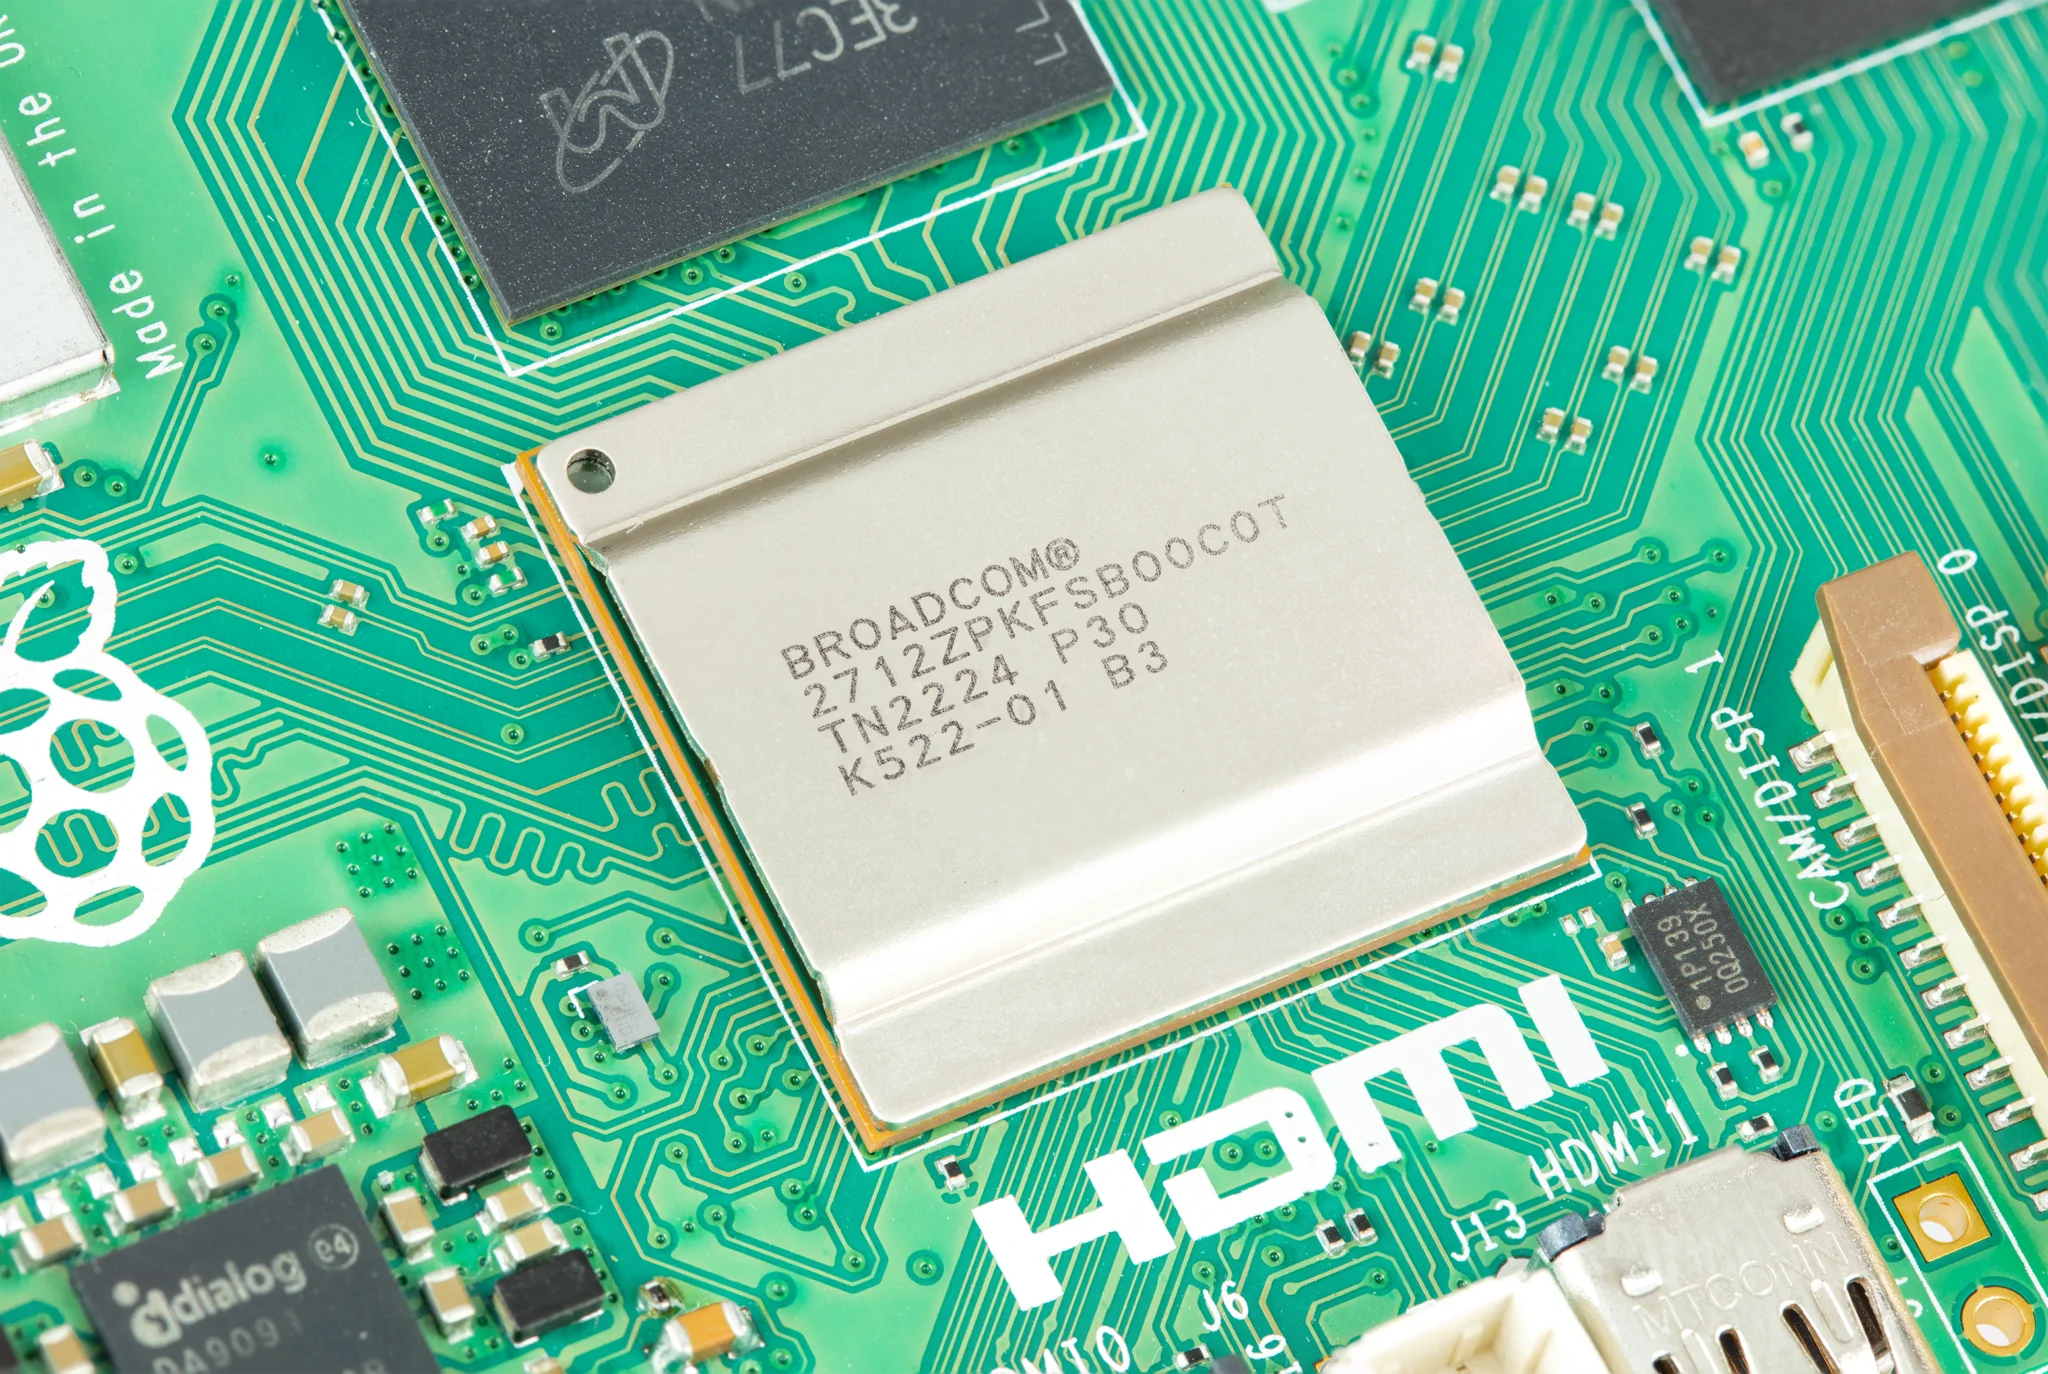 New Broadcom BCM2712 chip that powers the Raspberry Pi 5